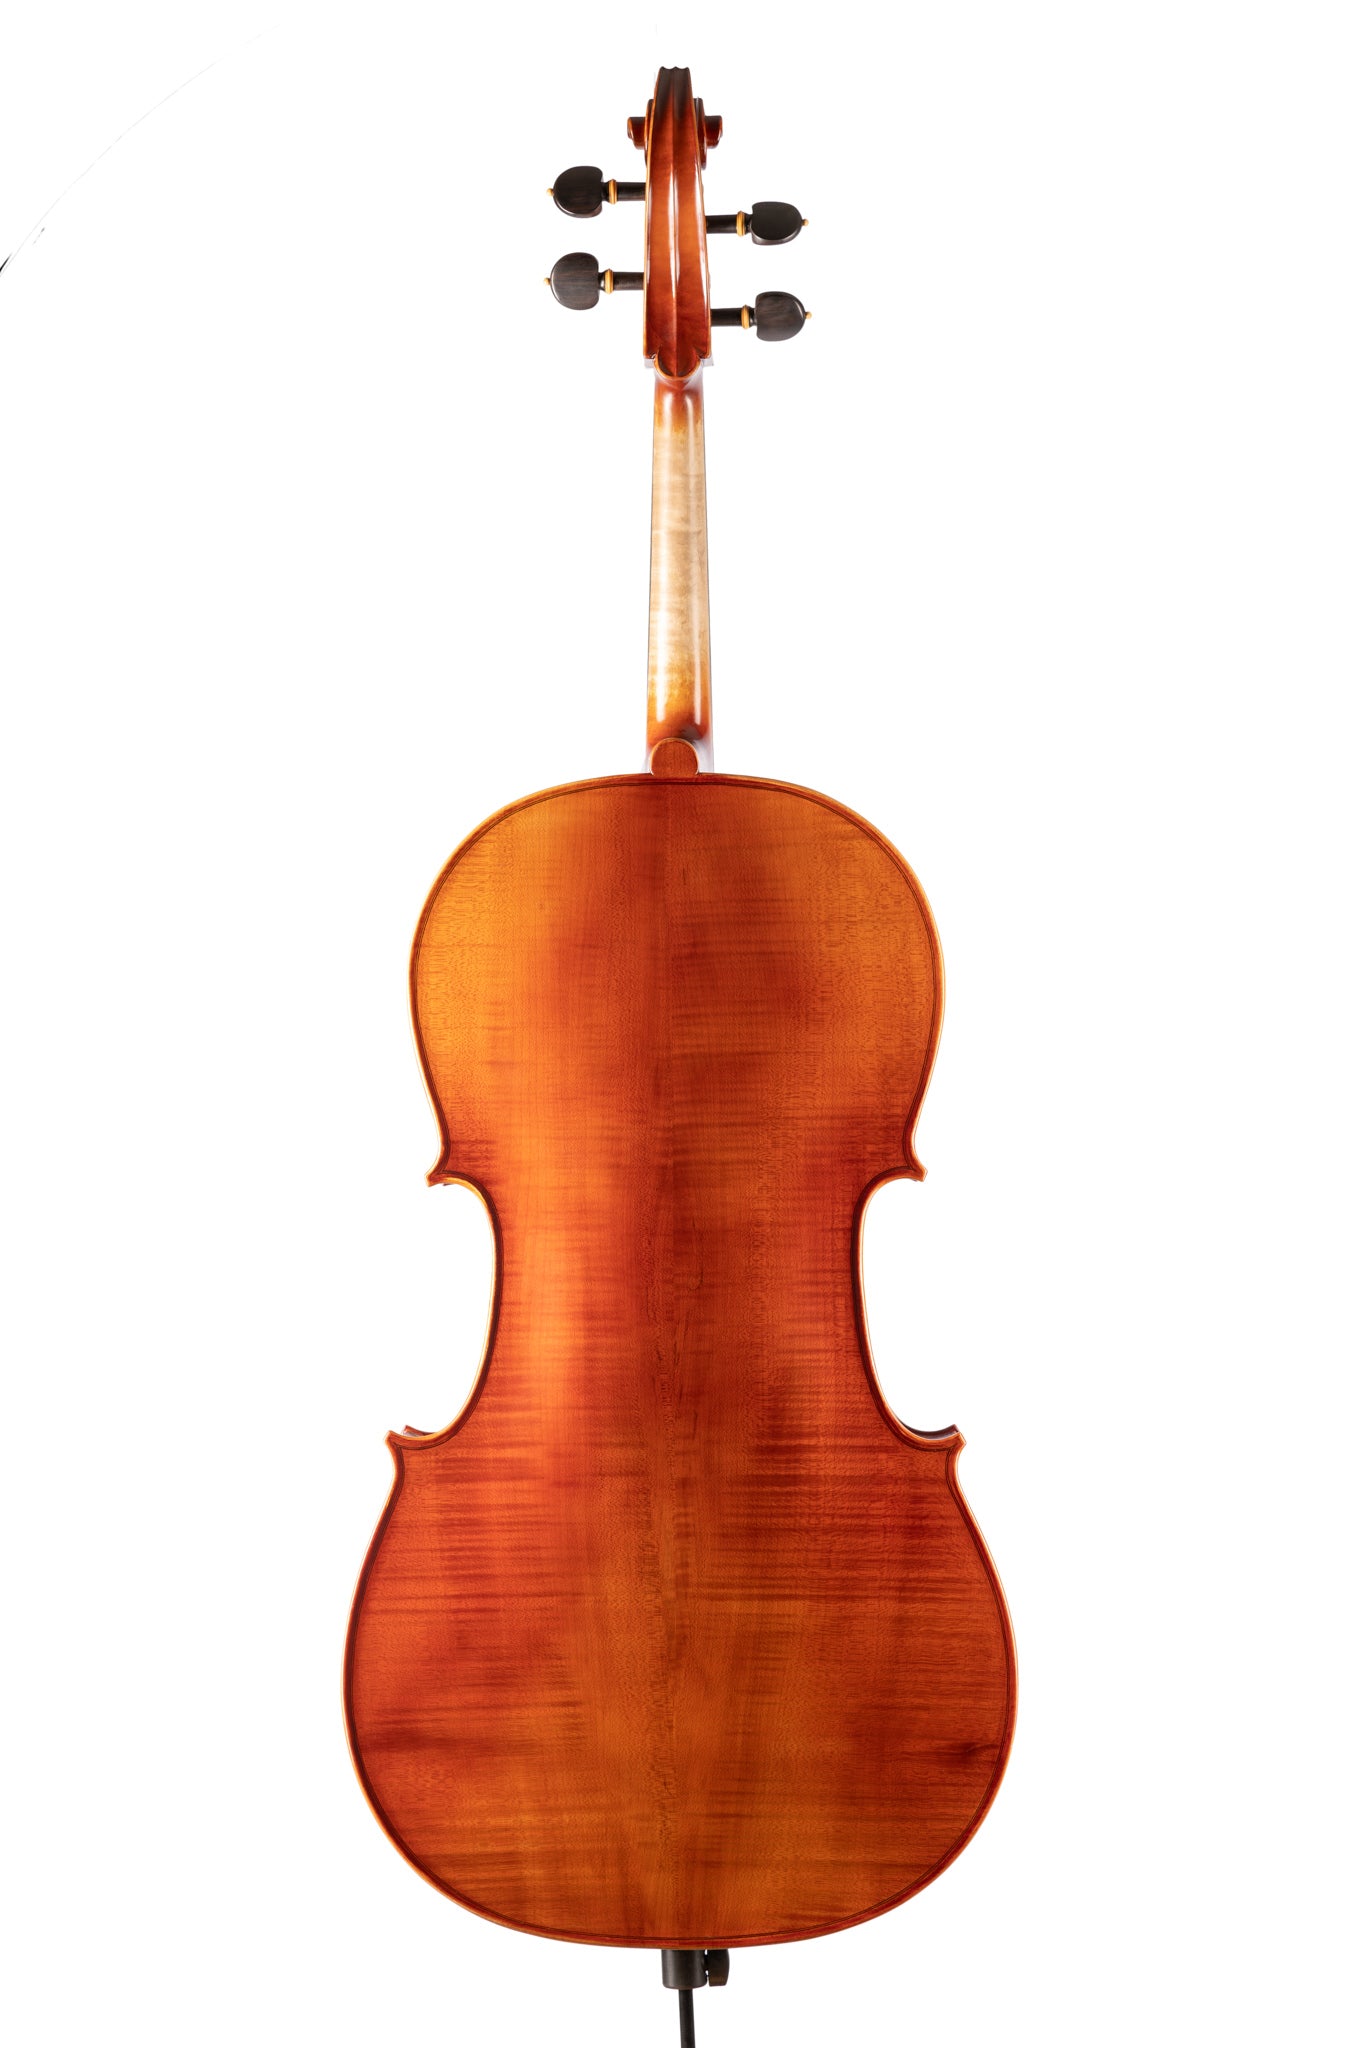 WY-300 Cello